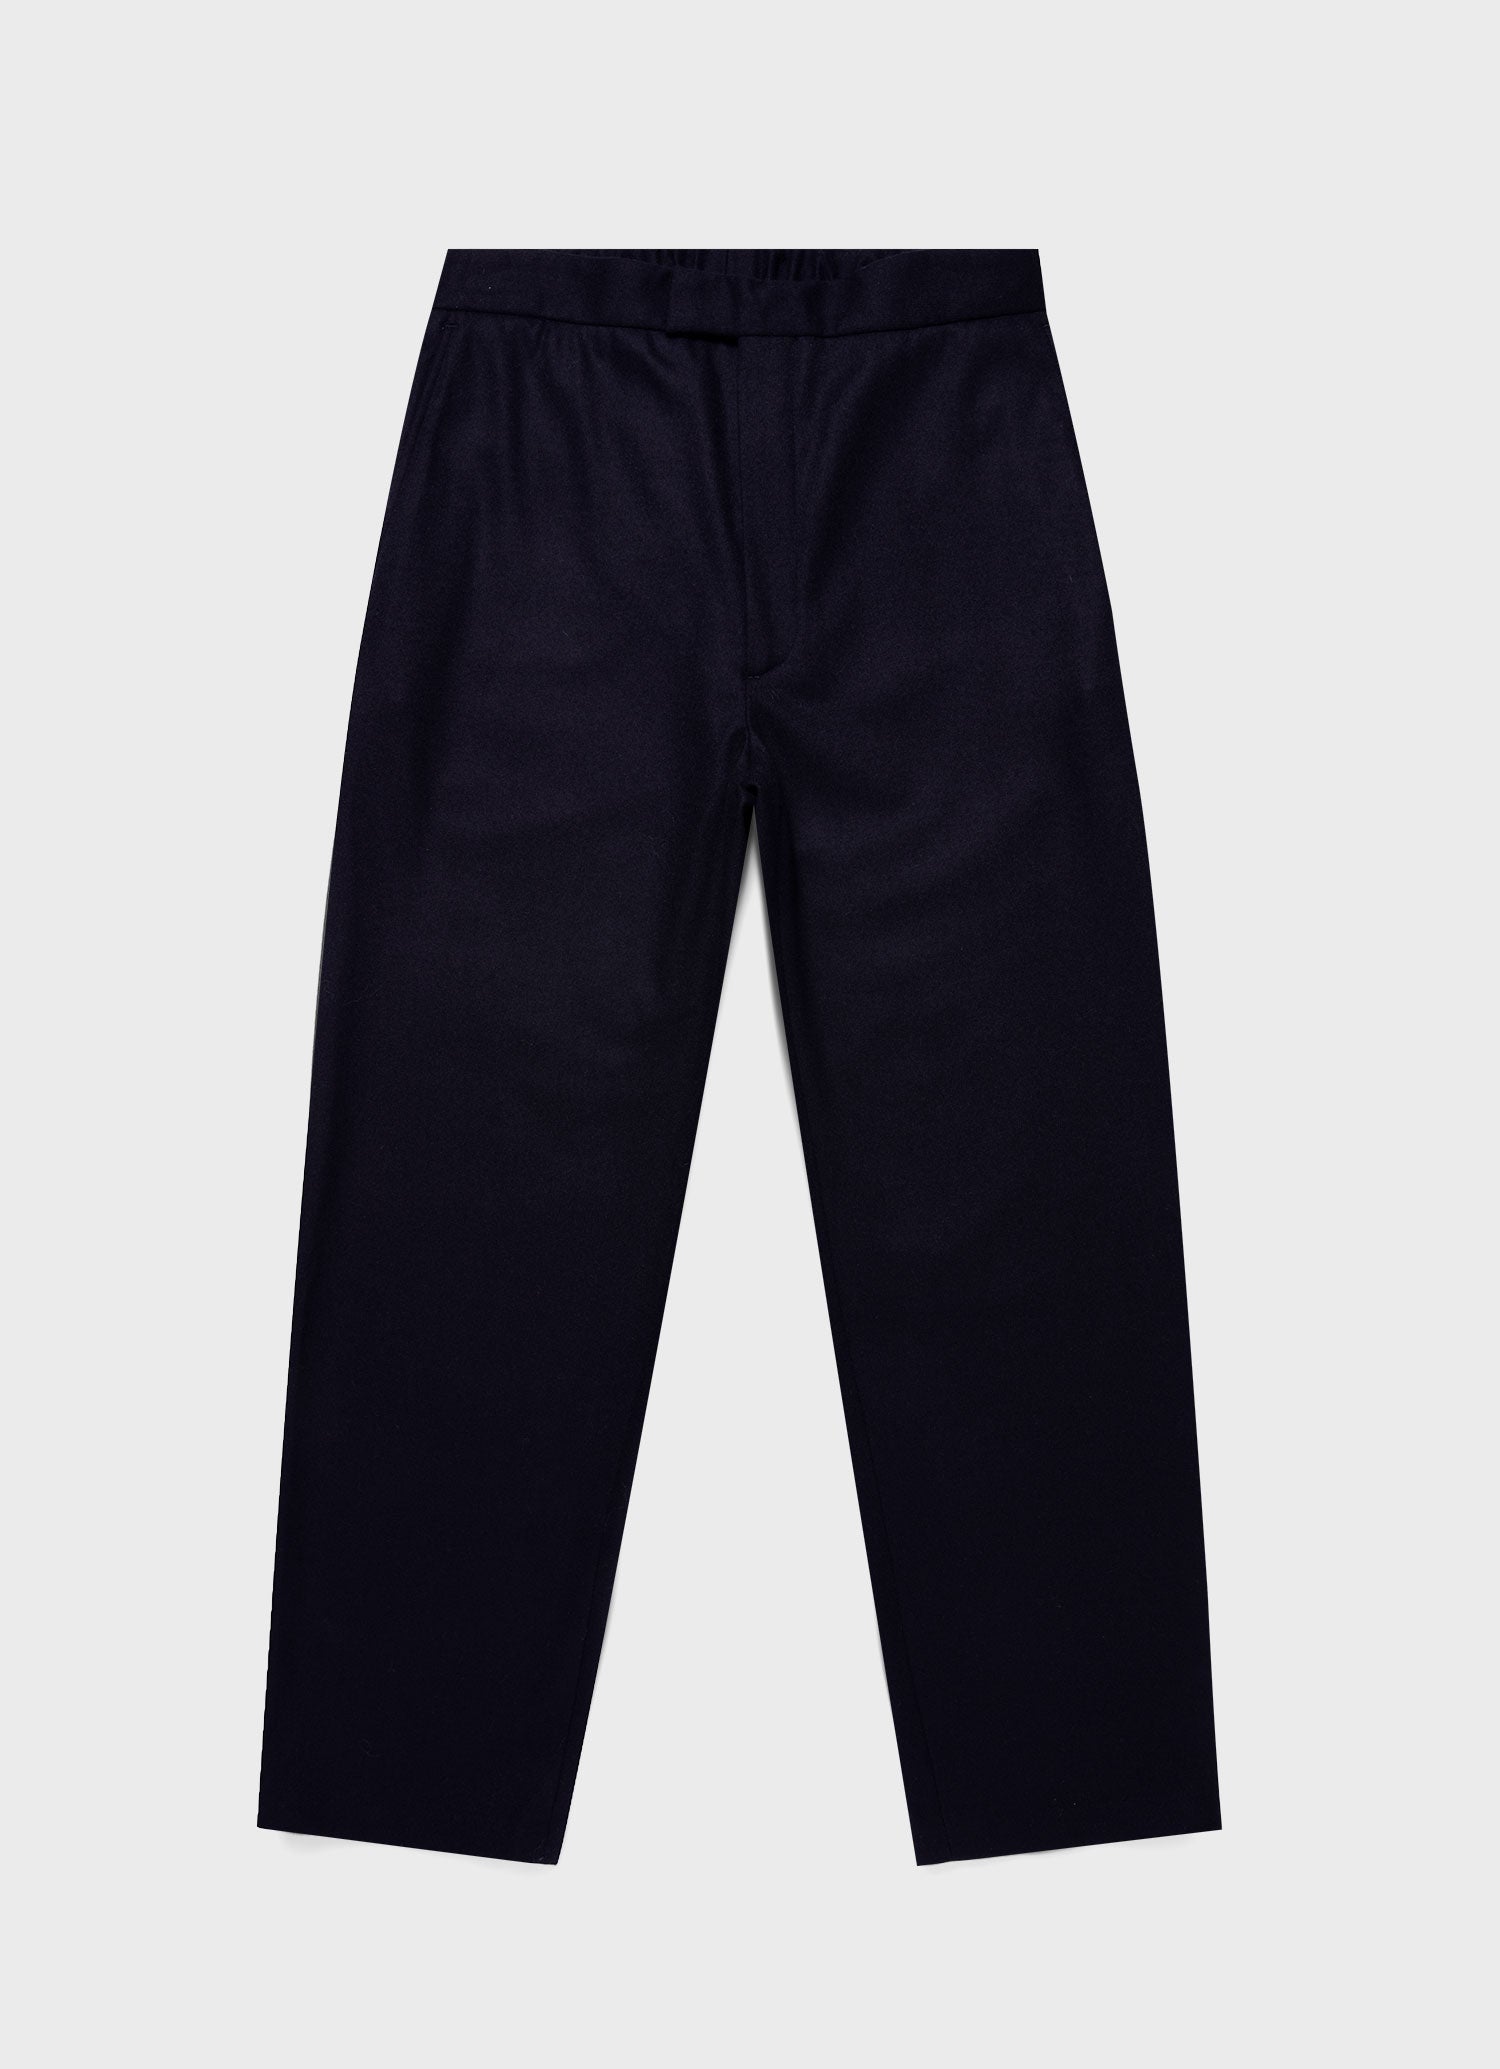 Men's Sunspel x Casely-Hayford Trouser in Navy